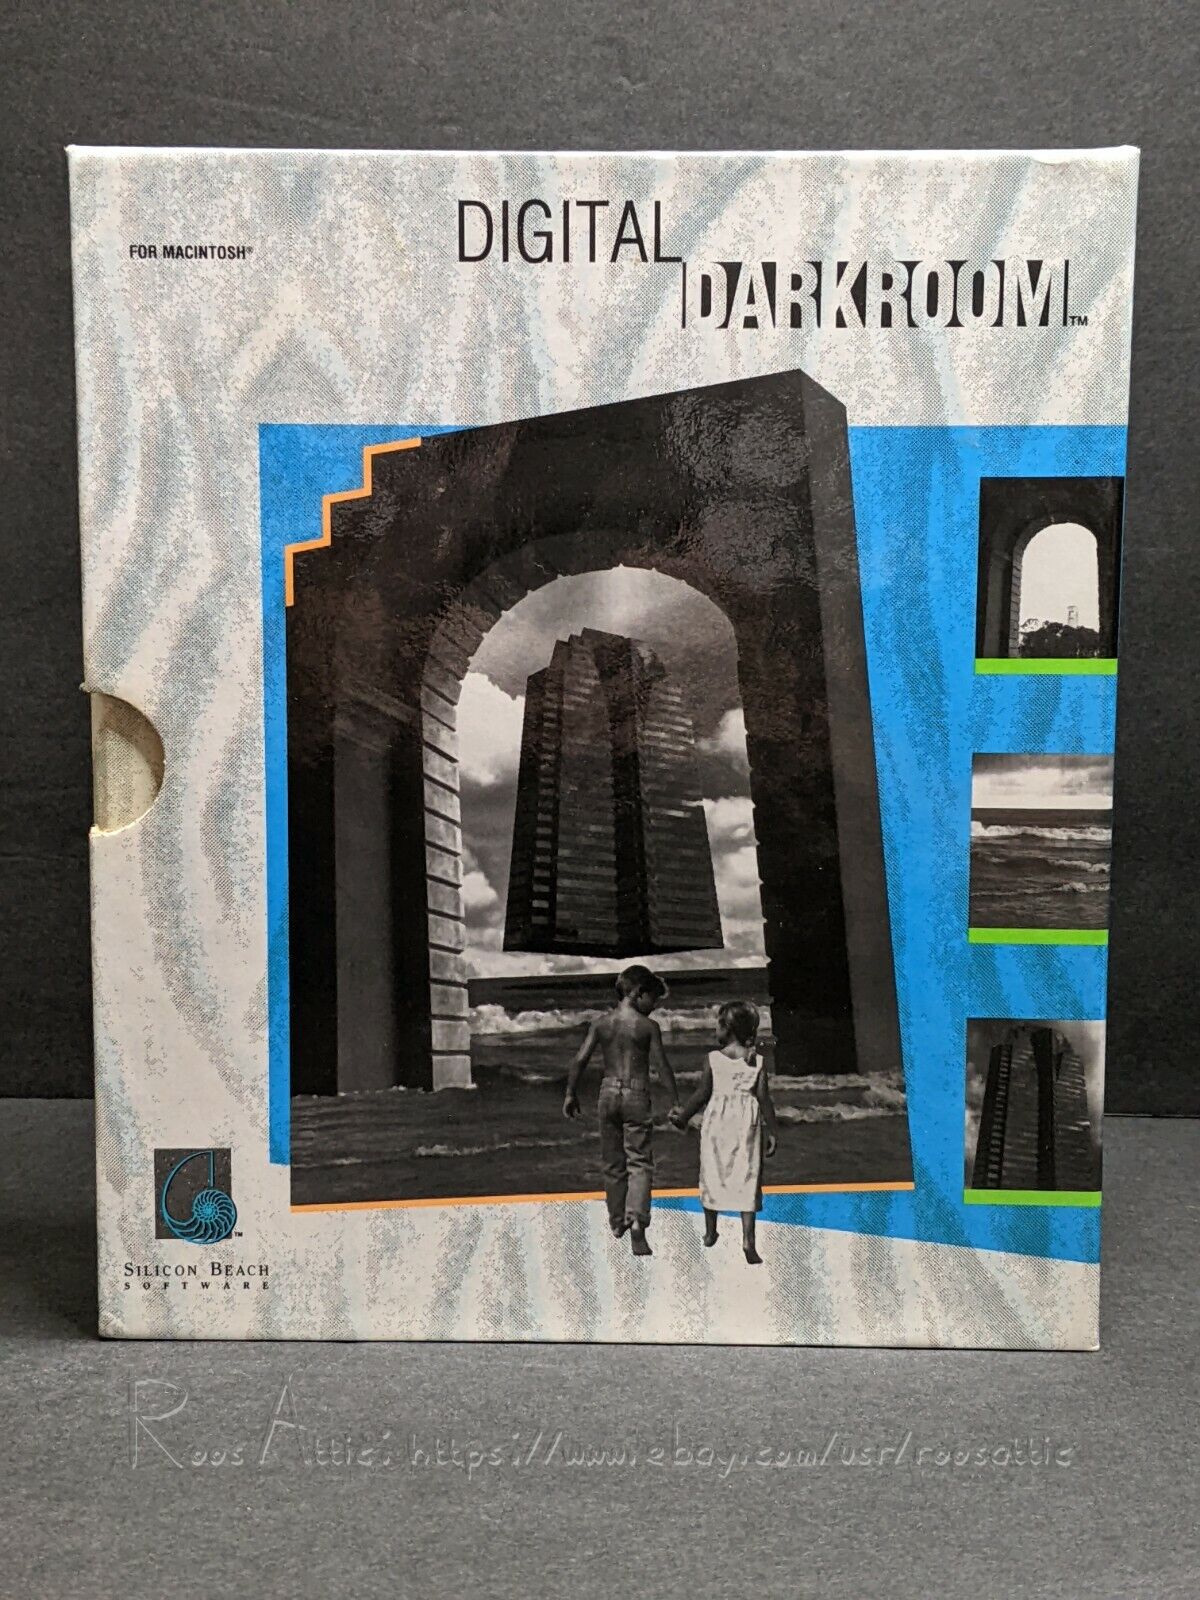 Digital Darkroom Evaluation Copy Apple Mac Plus, SE or II: Silicon Beach / 1988